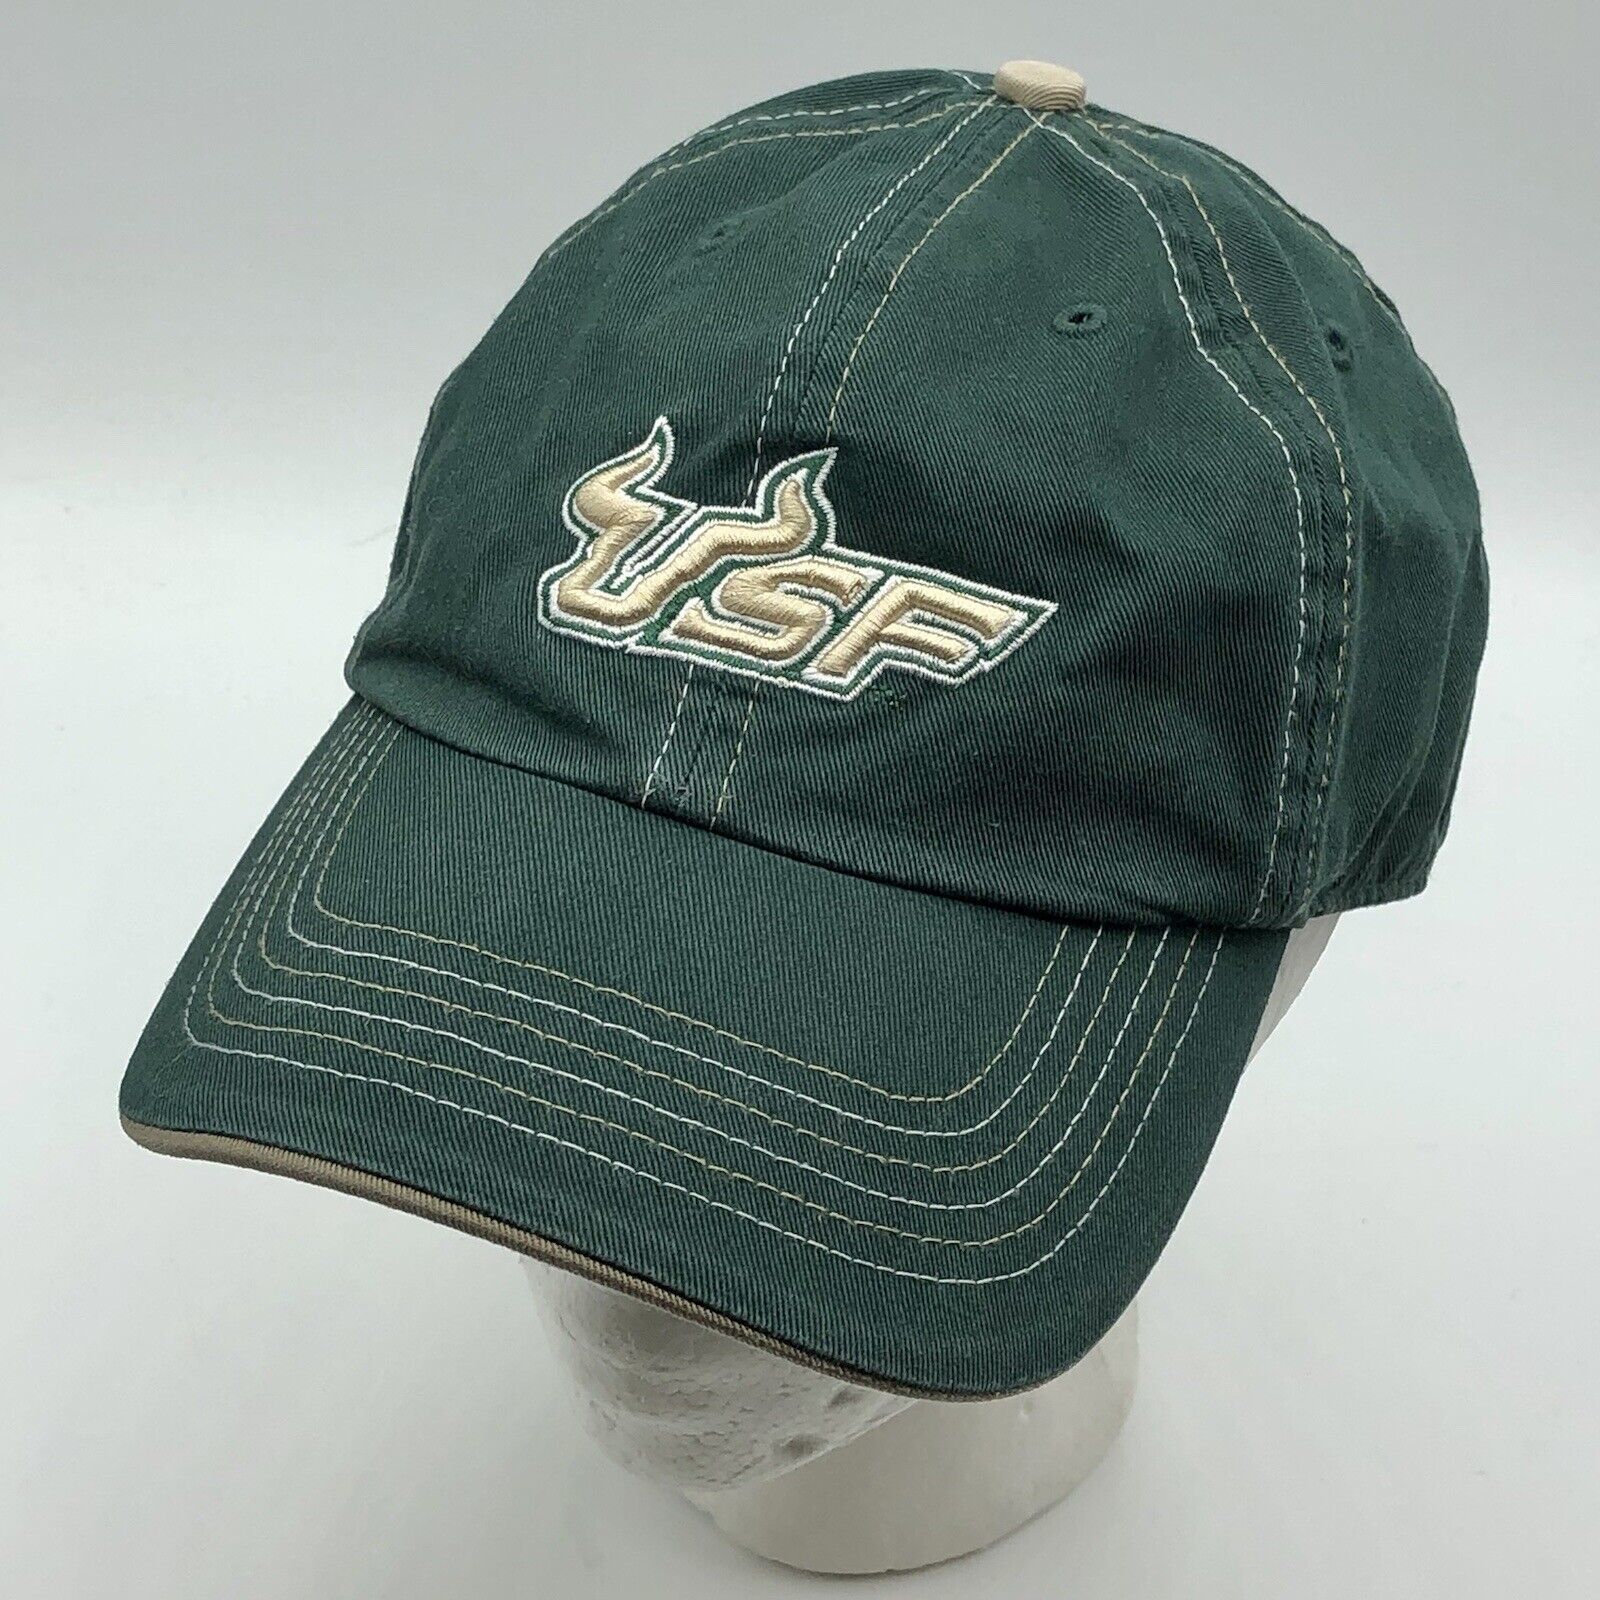 USF University South Florida Bulls Franchise Fitted Hat Cap Size Medium NCAA - $23.75